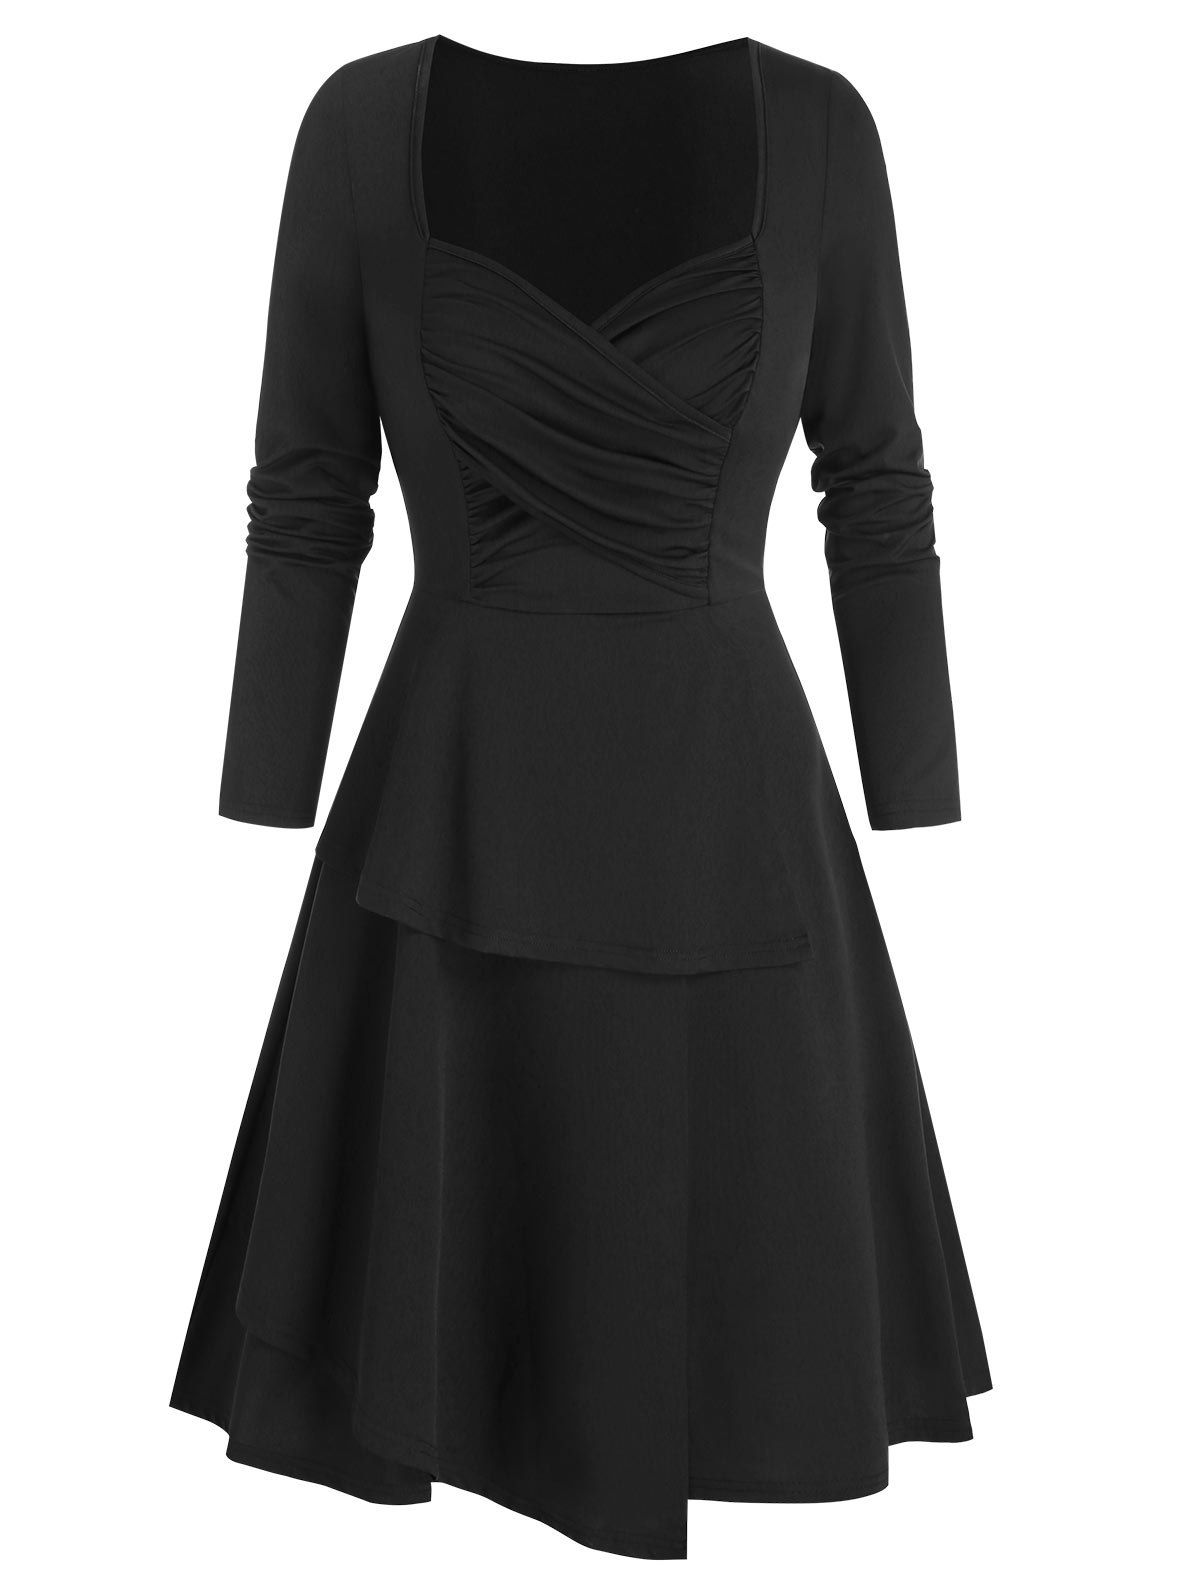 Long Sleeve Ruched Layered Mini Dress - BLACK M